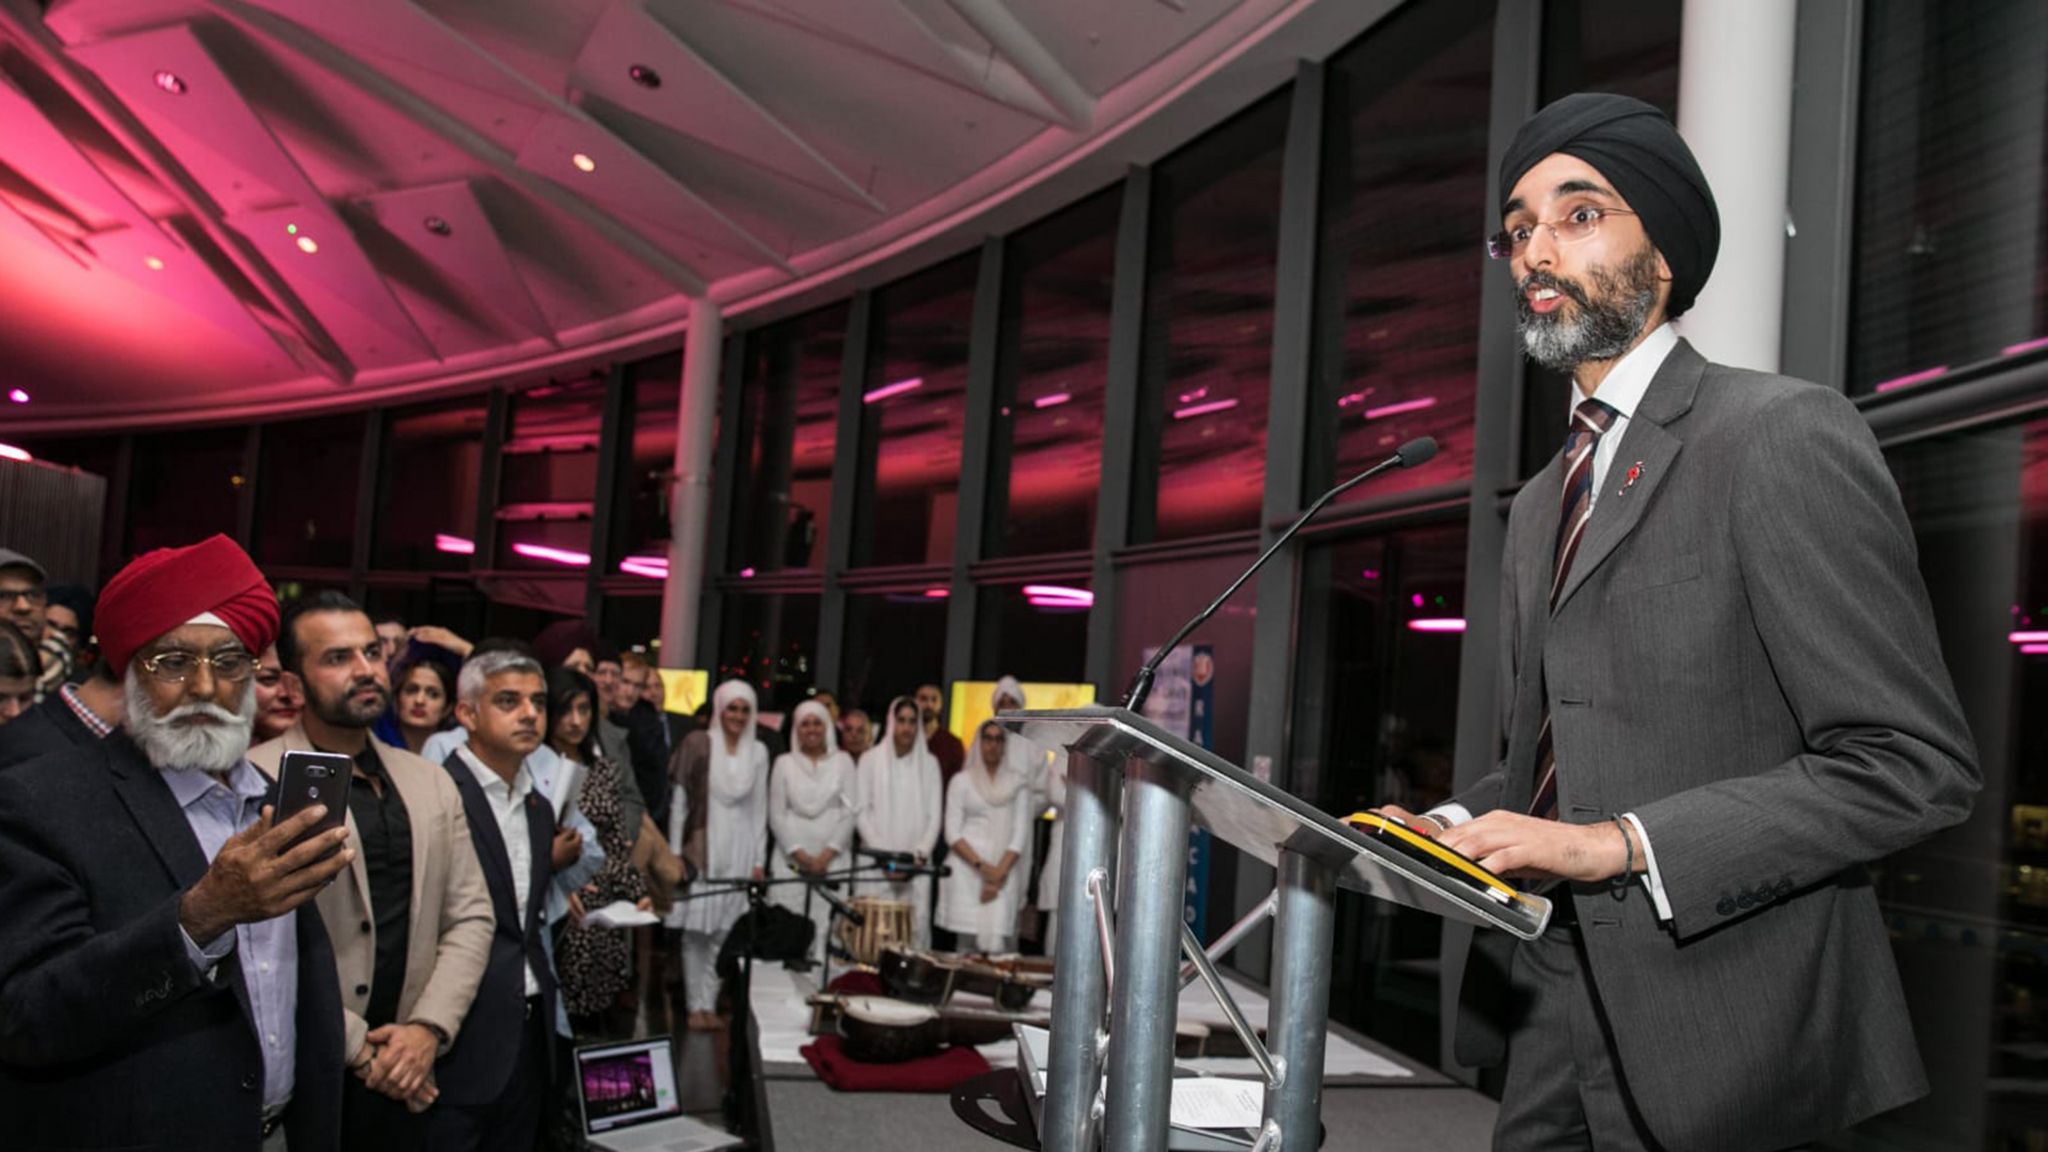 Jasvir addresses meeting (Mayor of London Sadiq Khan stands in front row of audience)